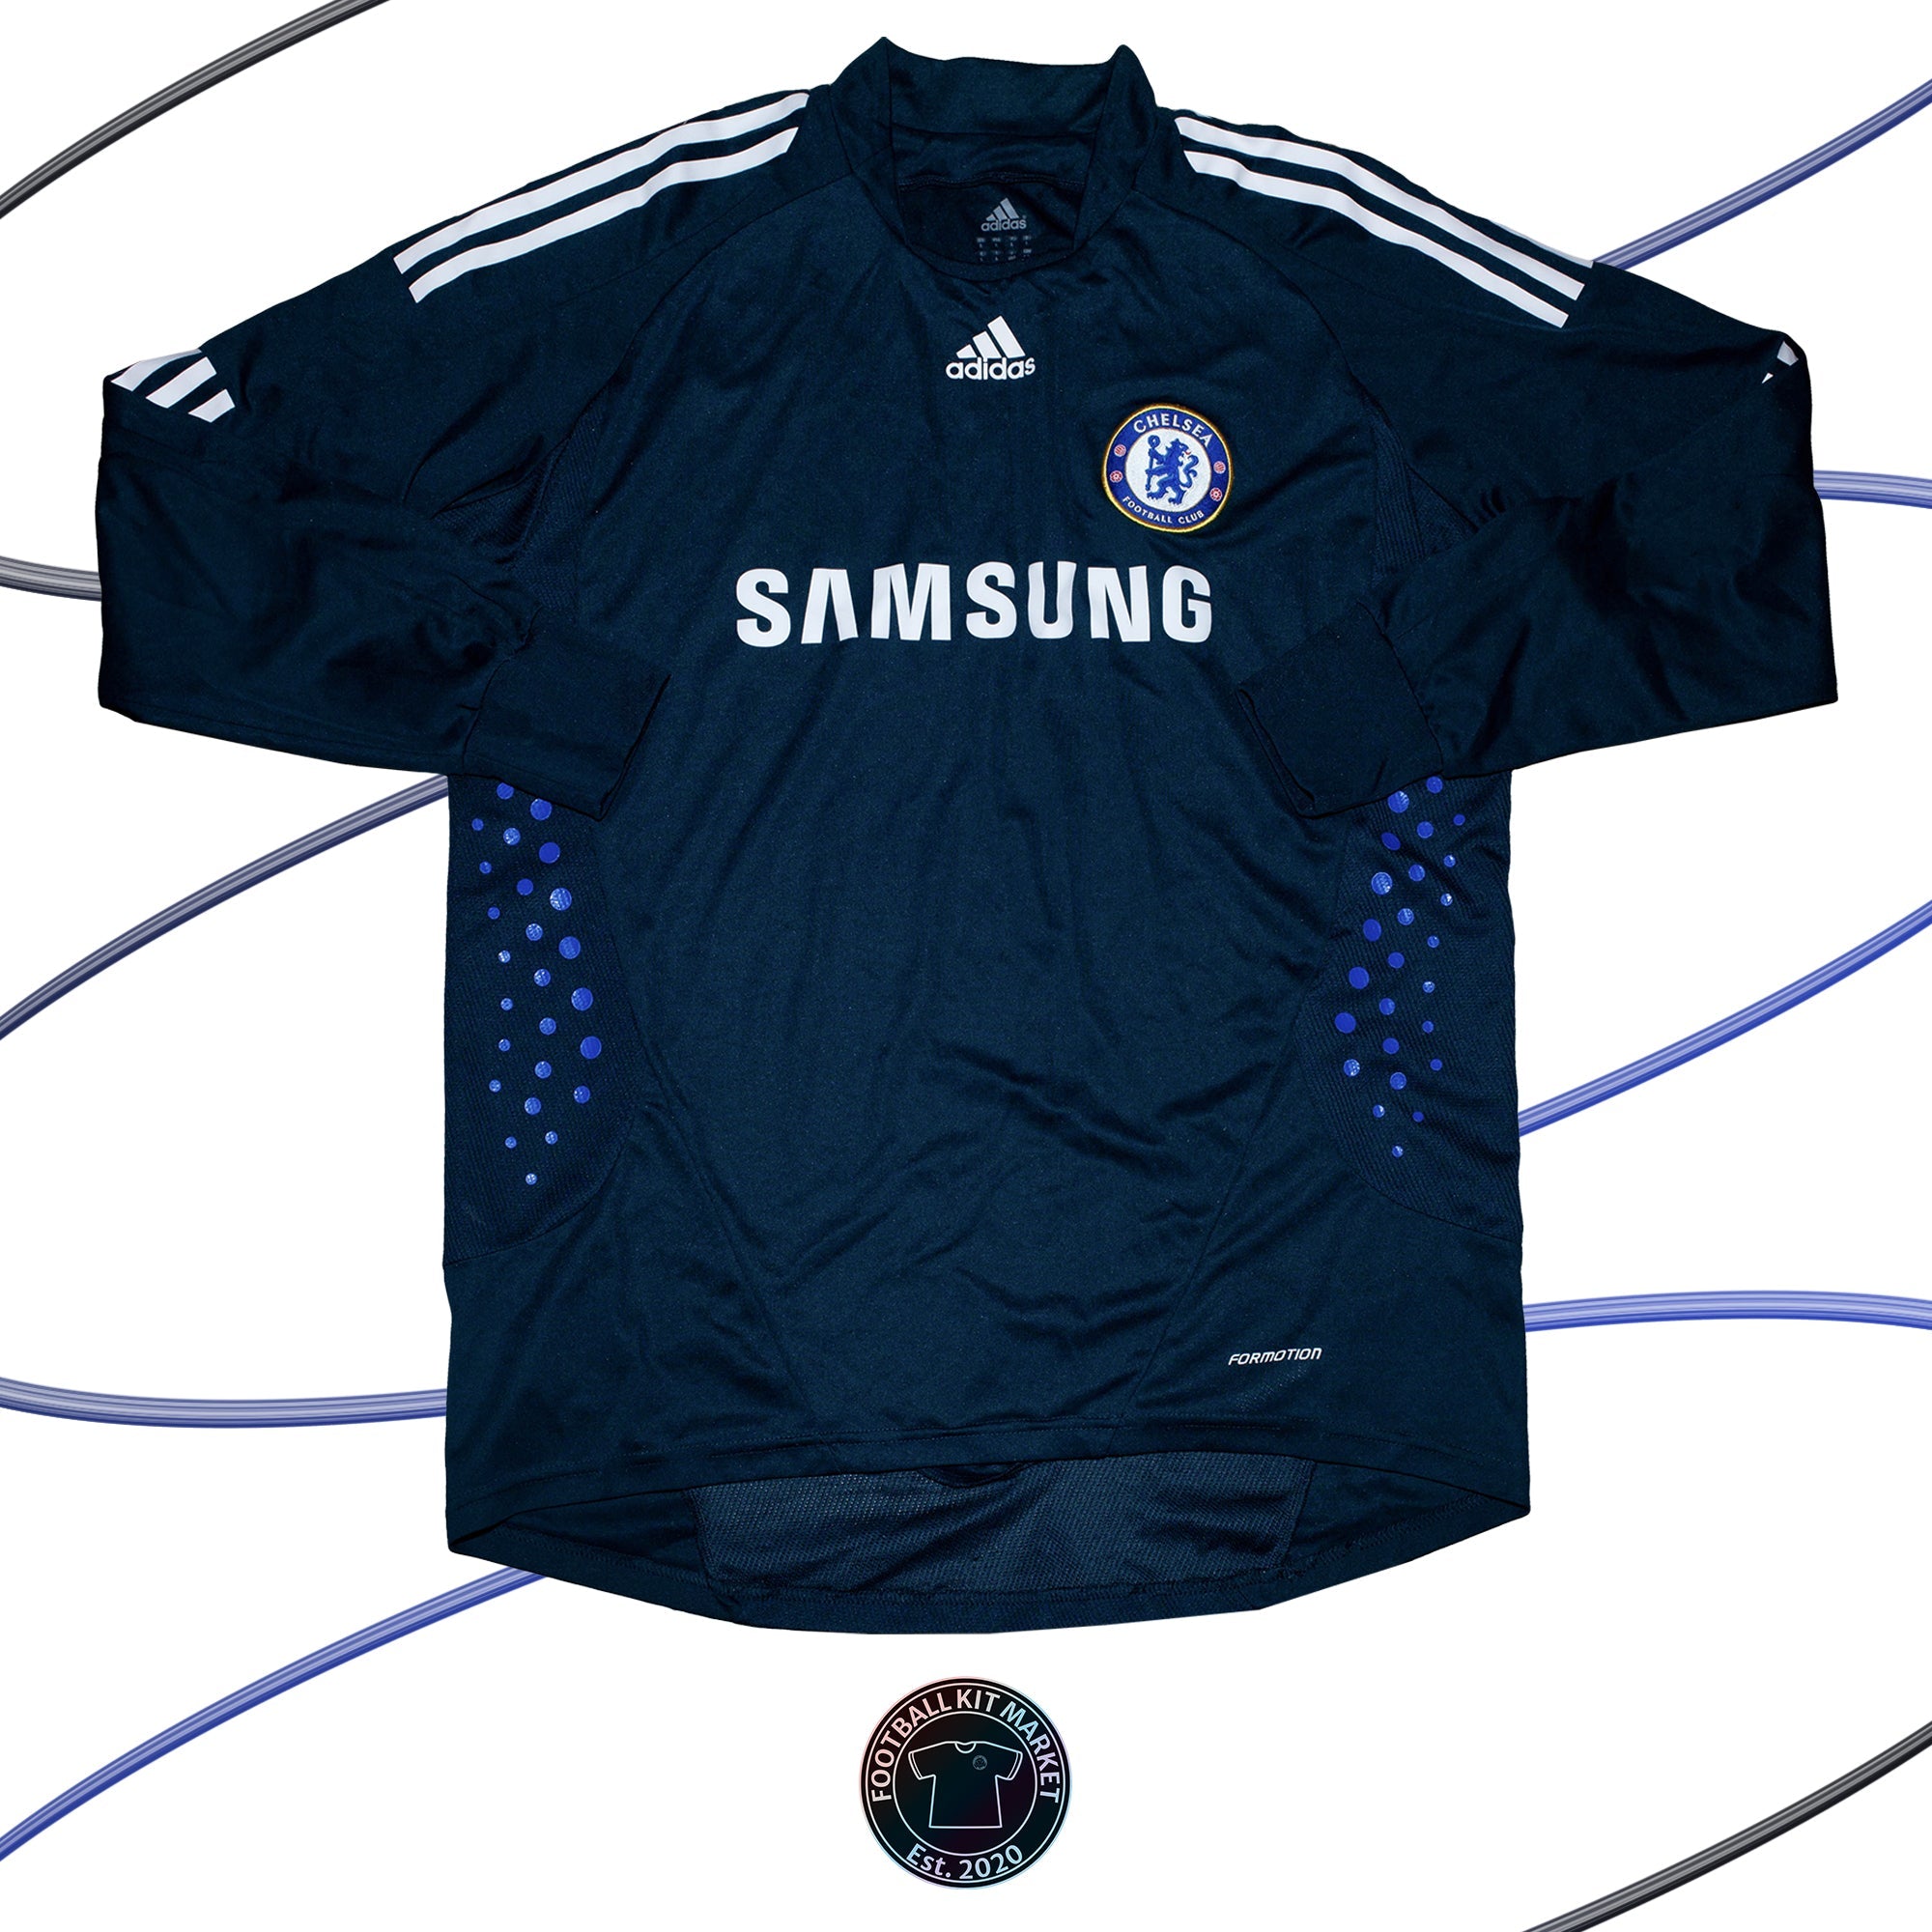 Genuine CHELSEA Goalkeeper Shirt (2008-2009) - ADIDAS (L) - Product Image from Football Kit Market